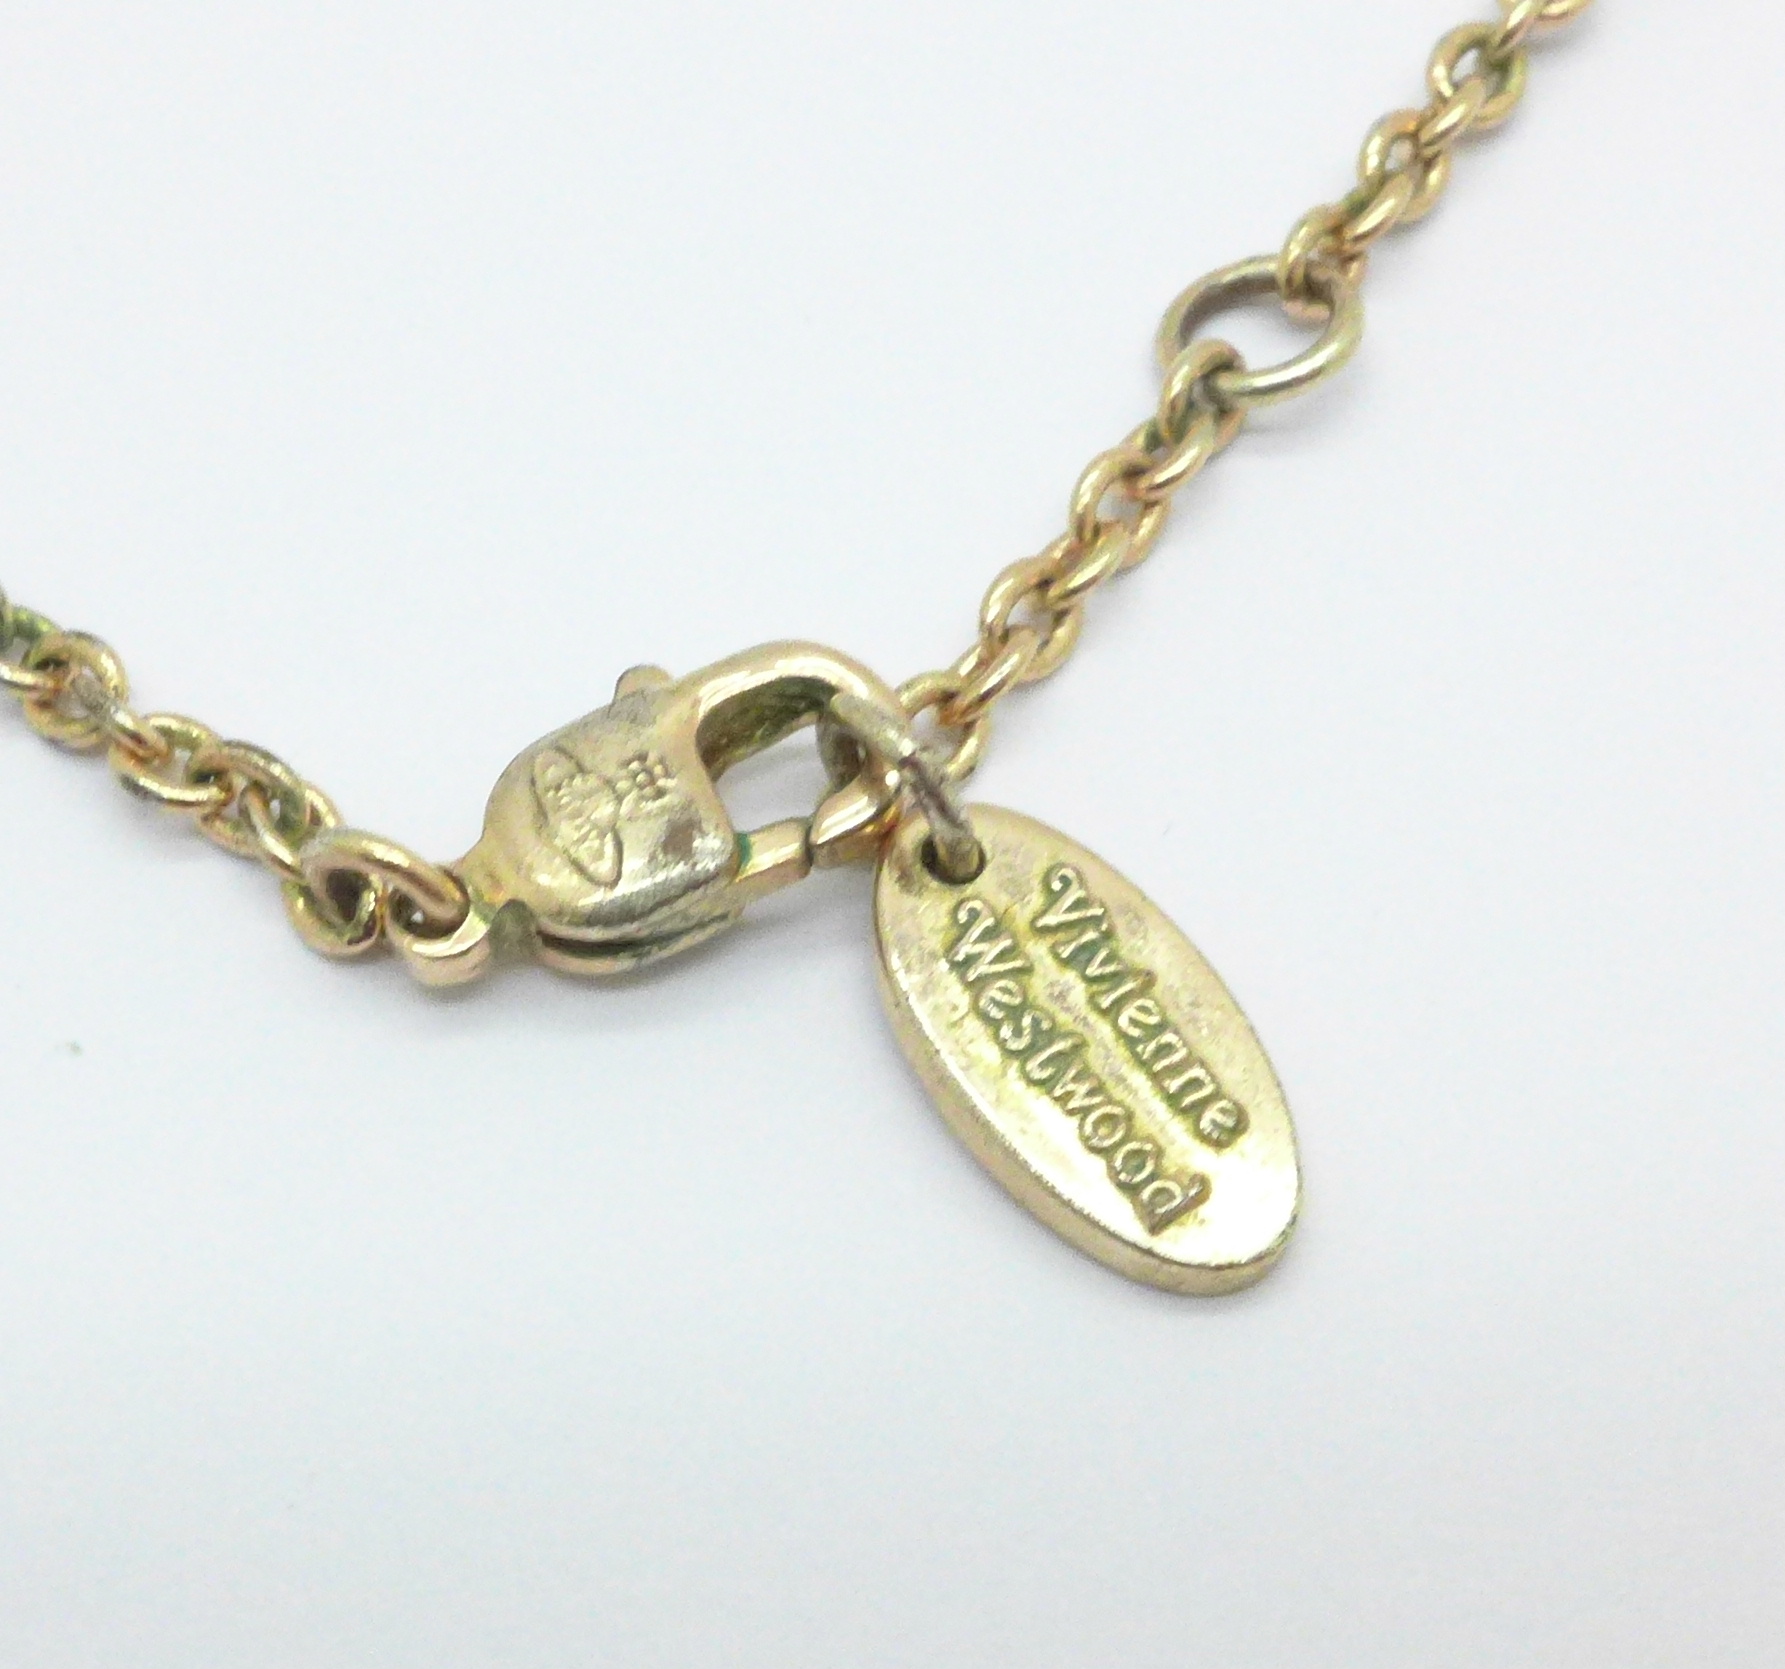 A Vivienne Westwood necklace, (pendant worn) - Image 4 of 4